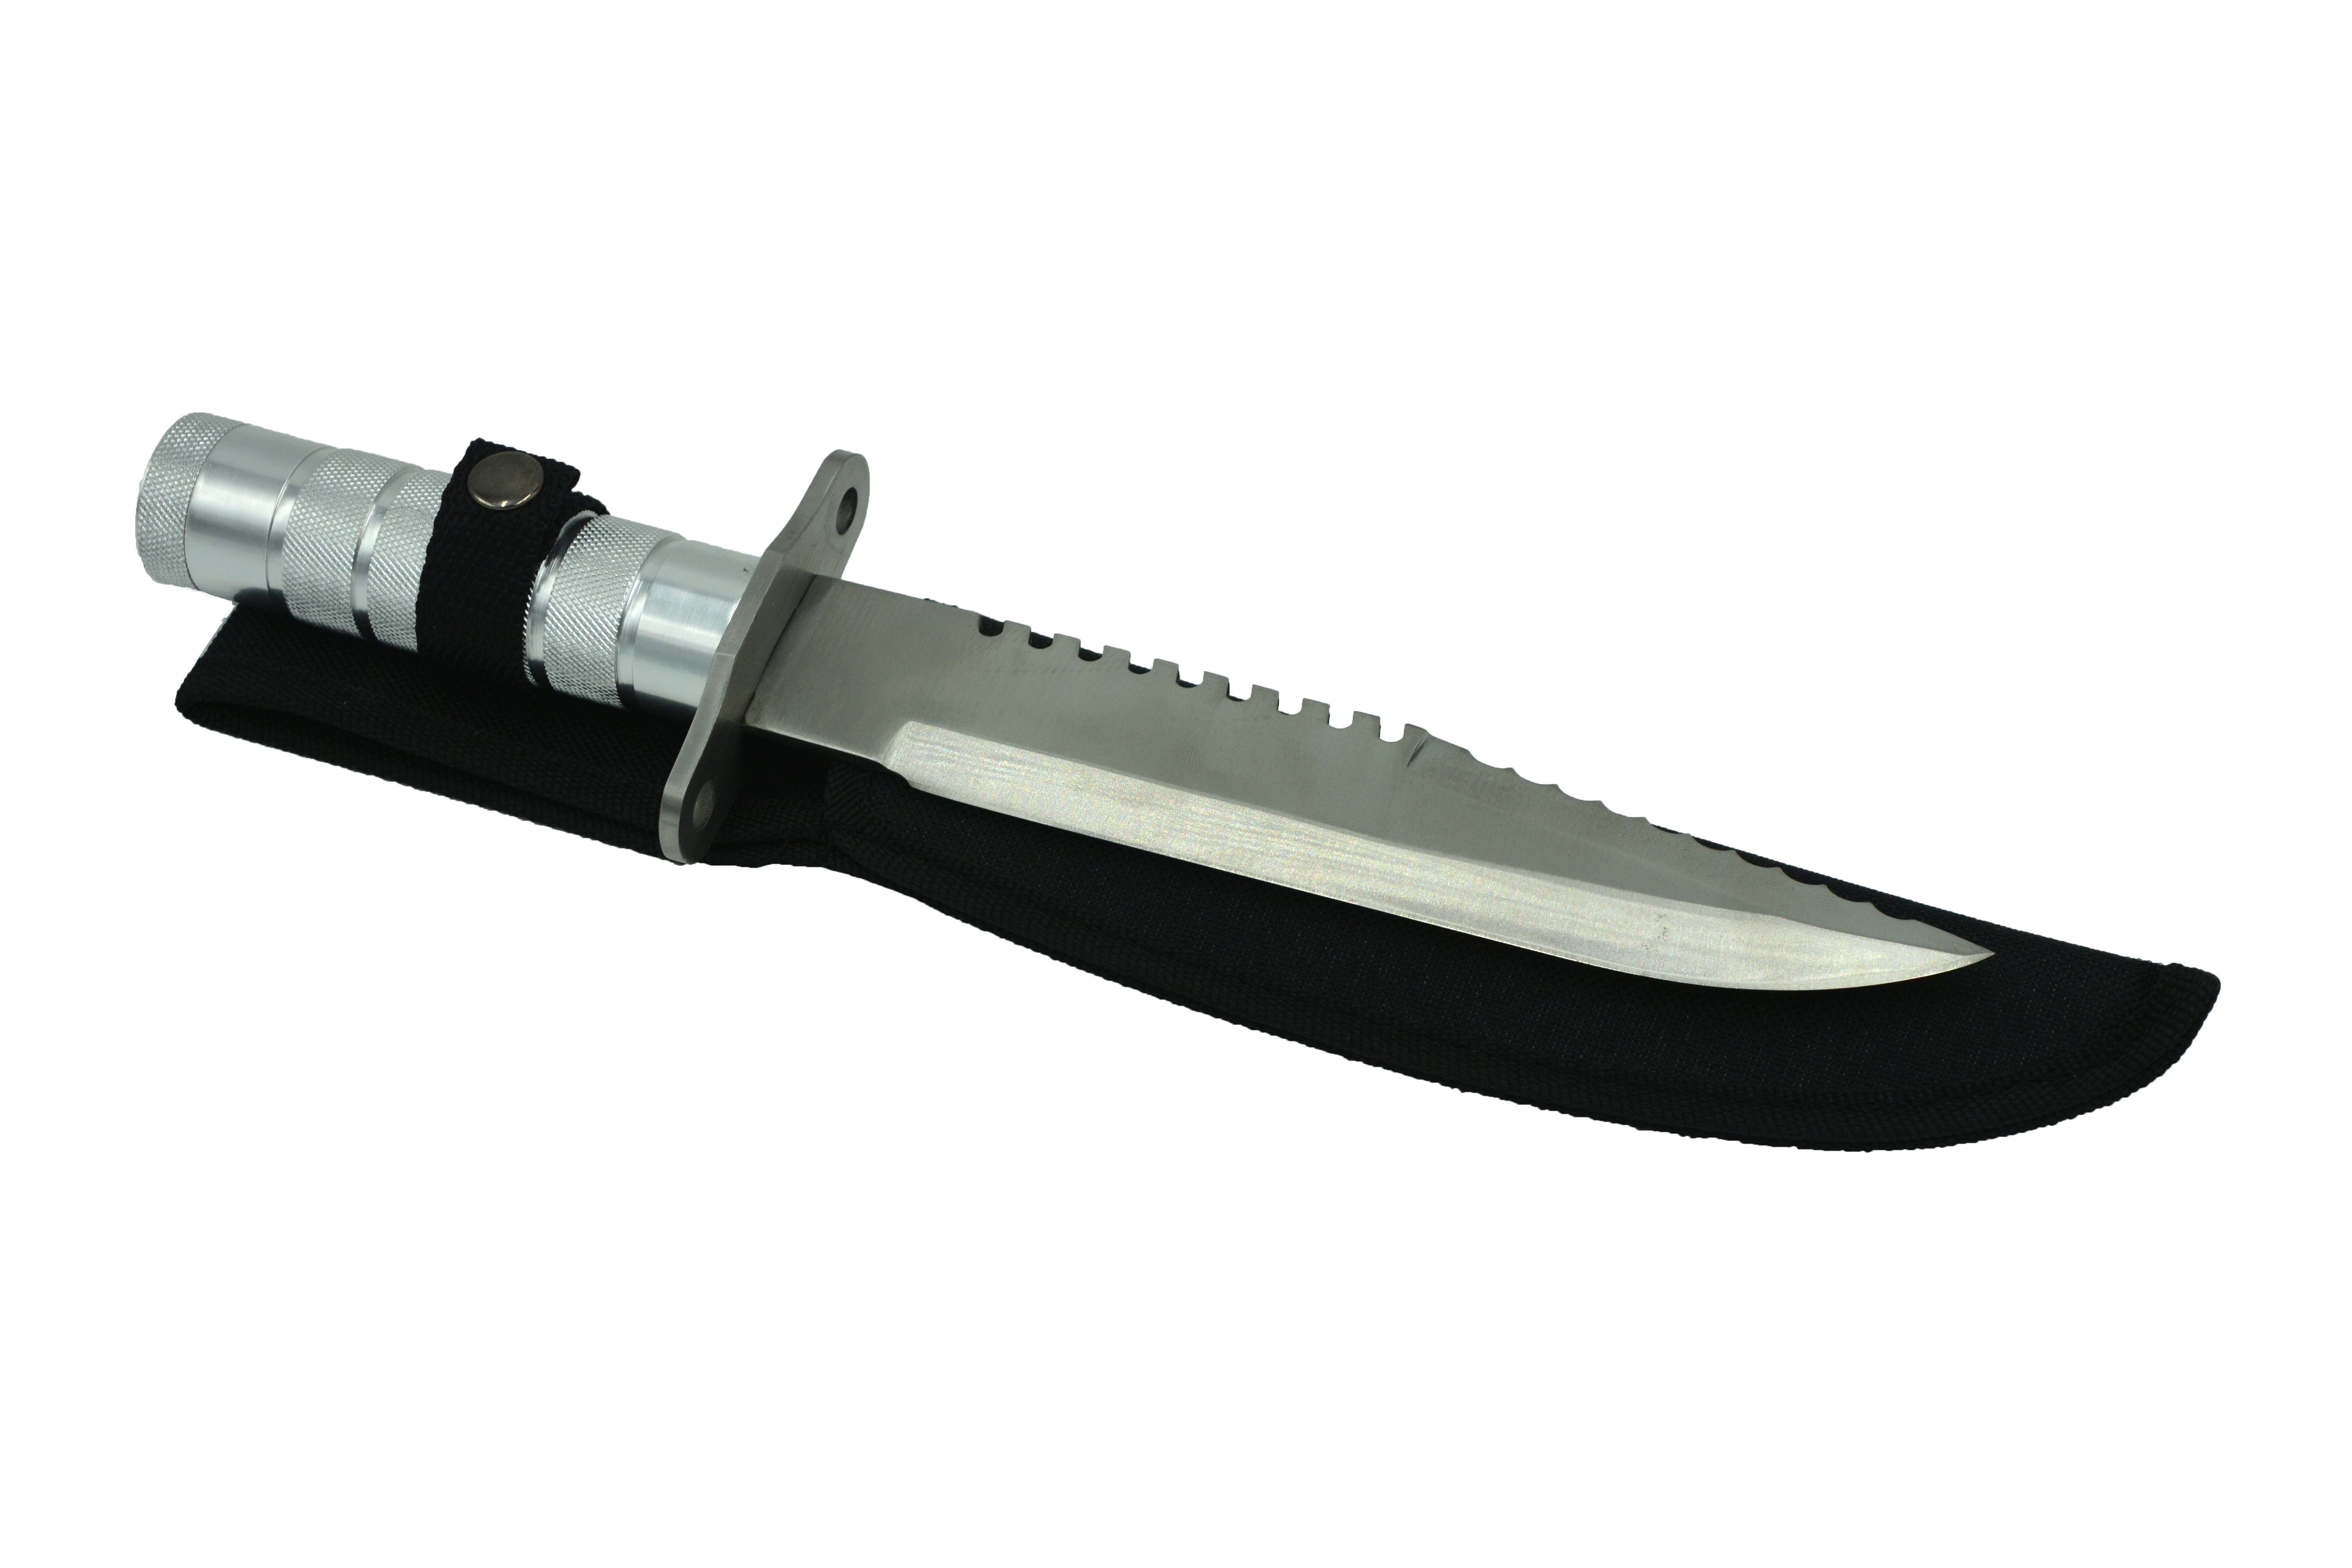 Zenport Survival Knife and Kit Model 14037, 7.6-inch blade, 12-inch long